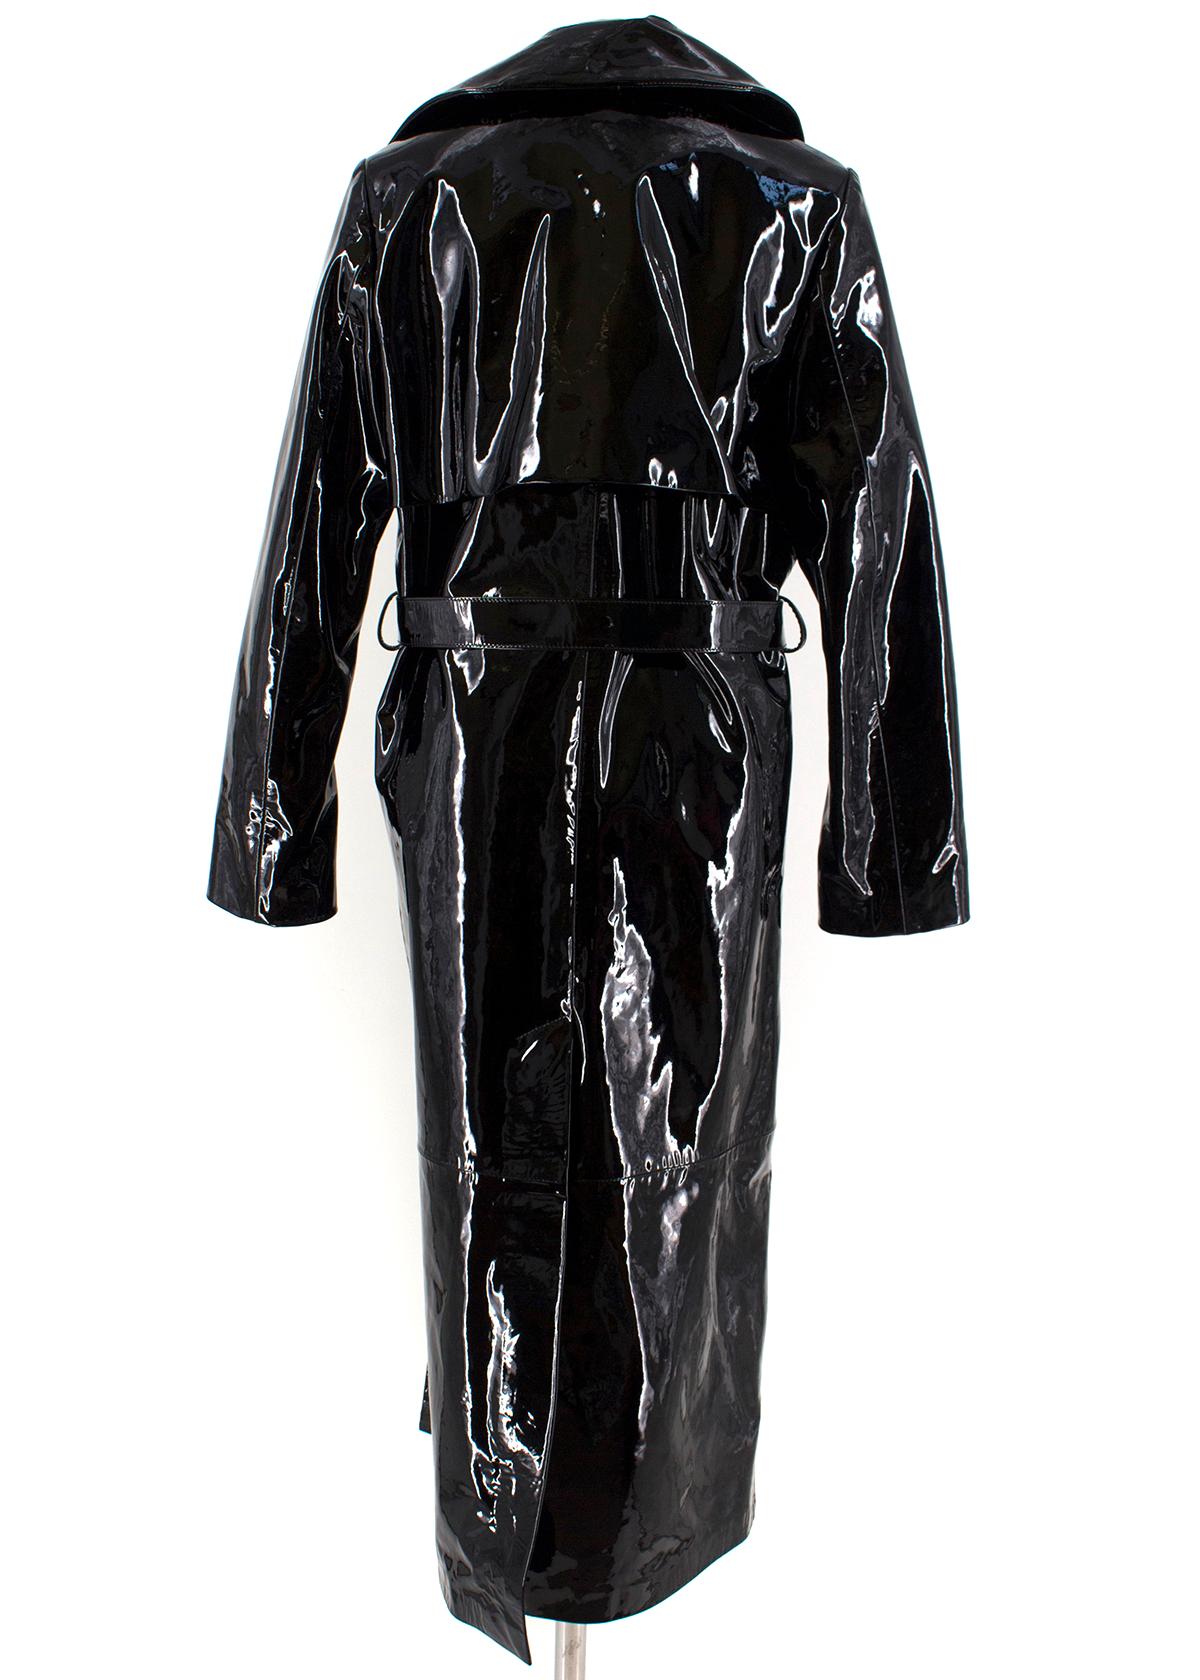 Skiim Karla Black Patent Leather Trench Coat - New Season Size 38 For ...